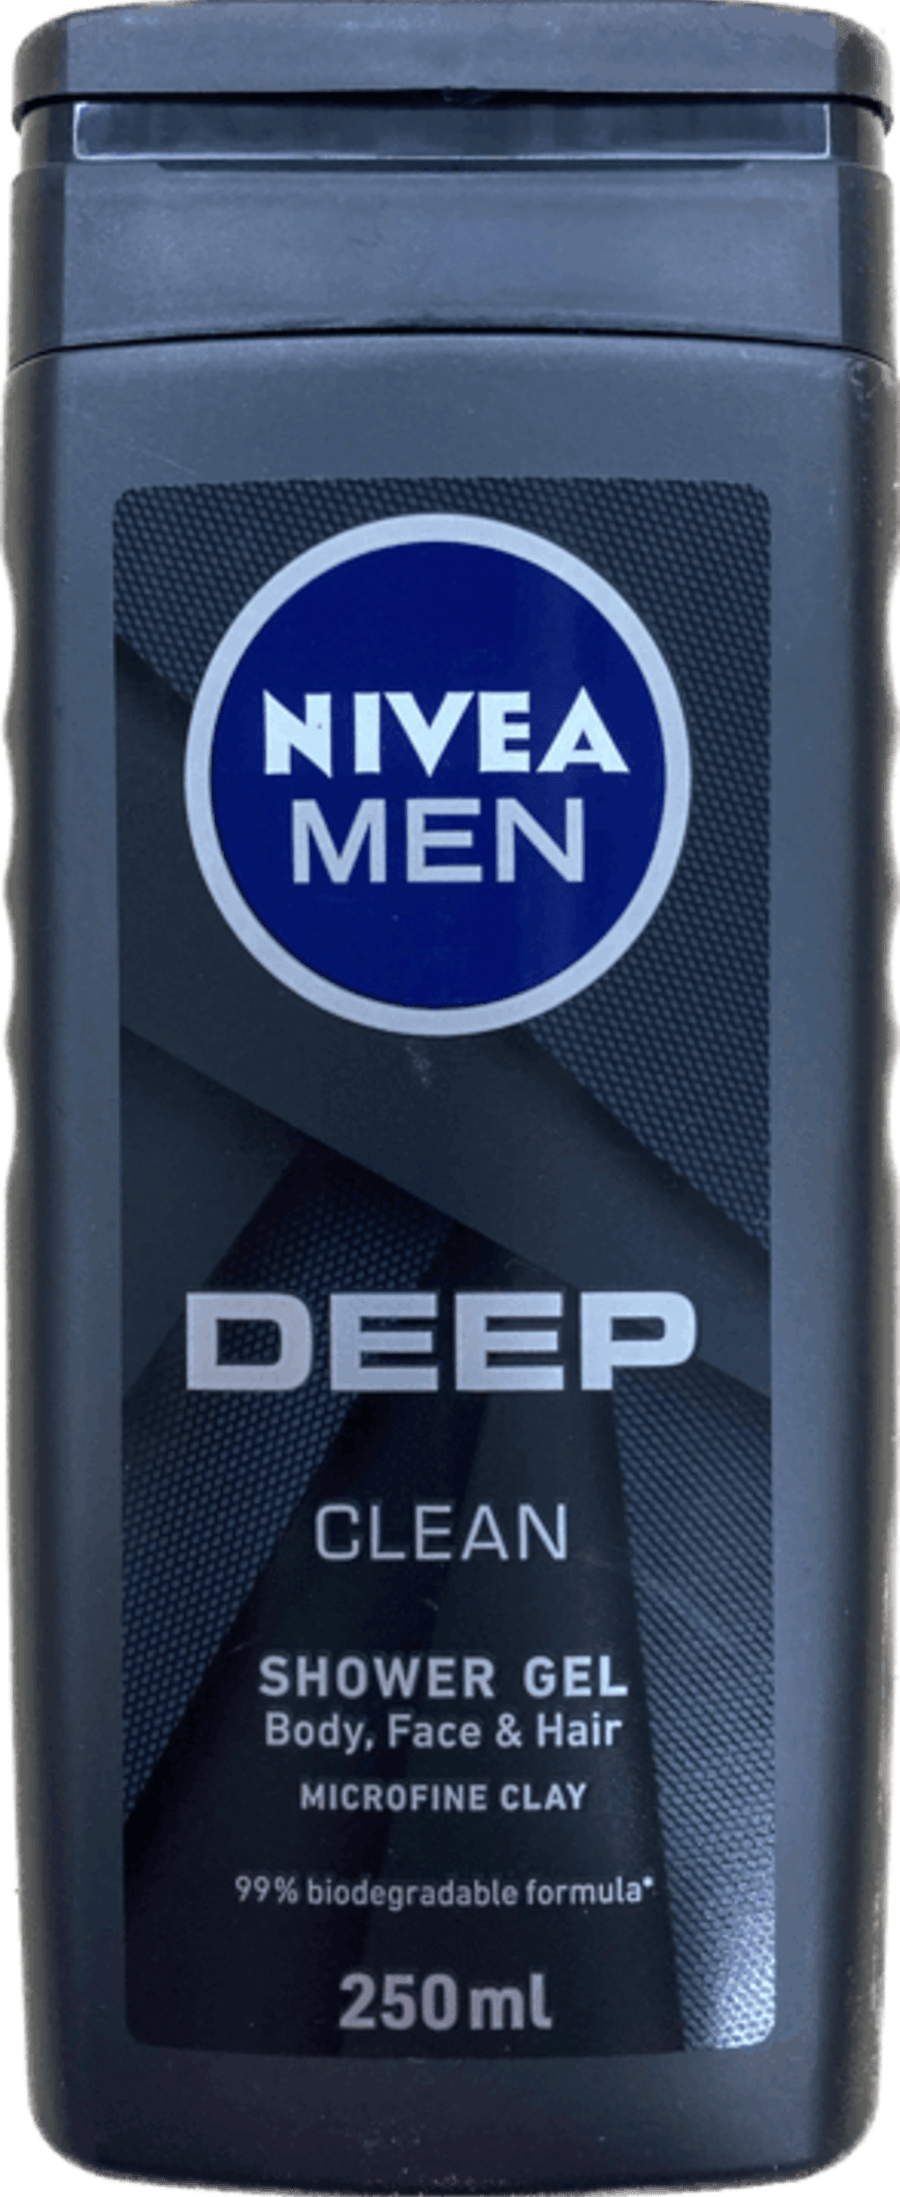 Nivea shower deep 250 ml